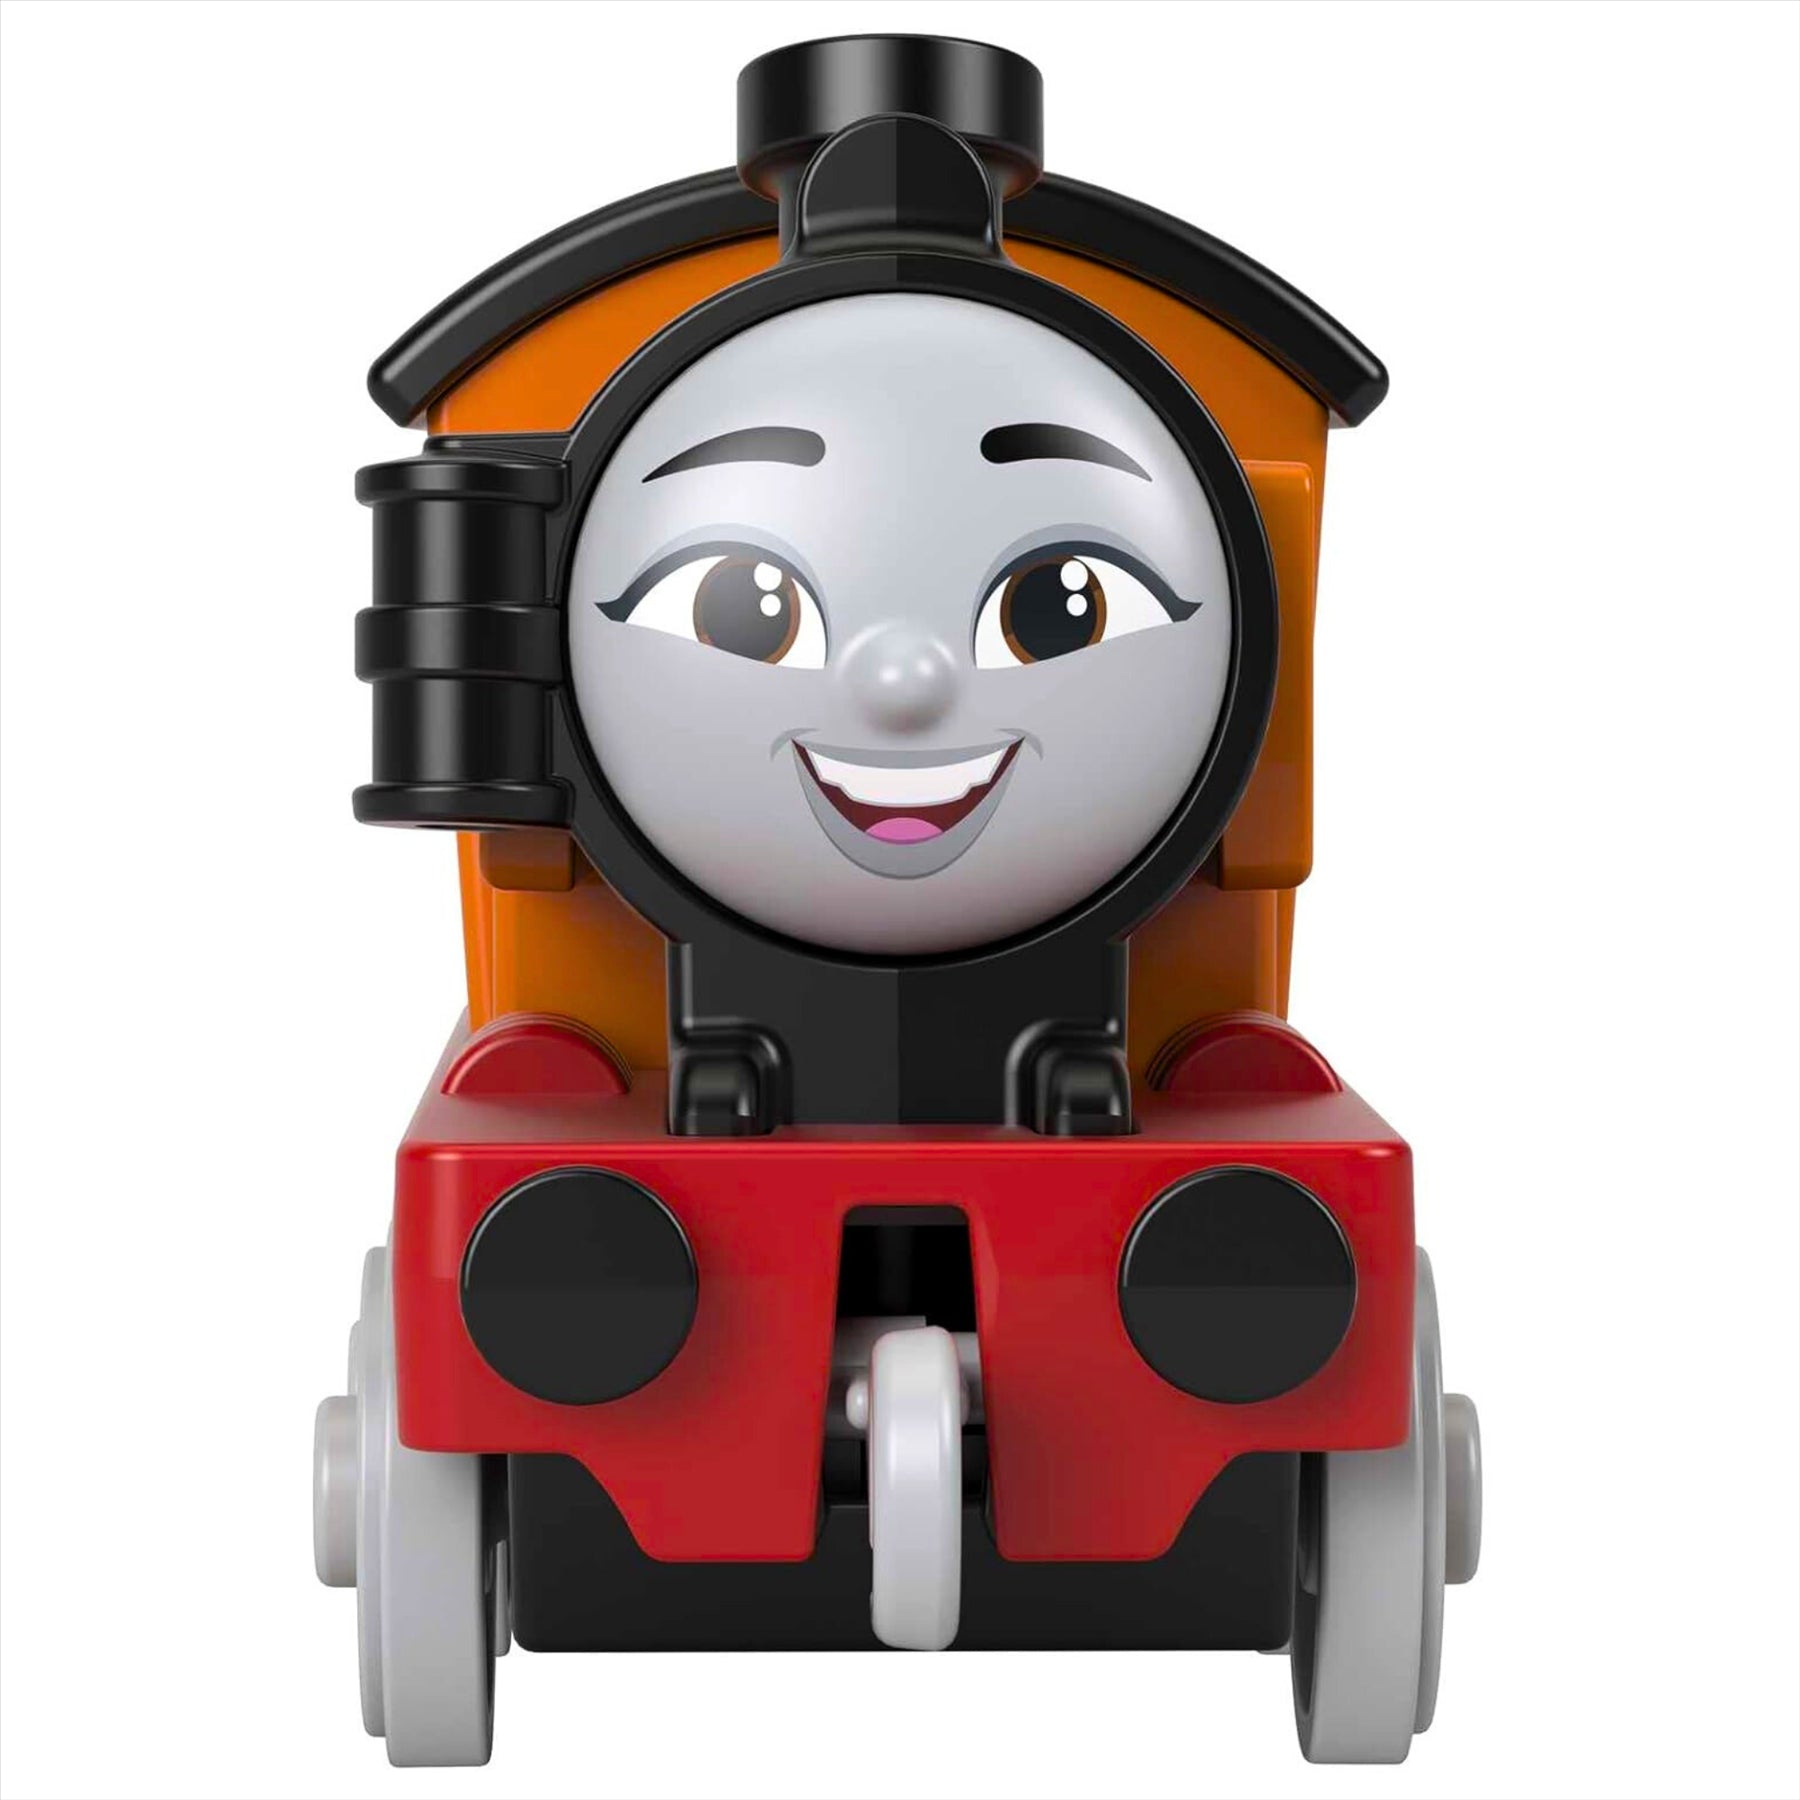 Thomas & Friends Nia Toy Train Diecast Metal Engine 8cm Push-Along Vehicle - Toptoys2u